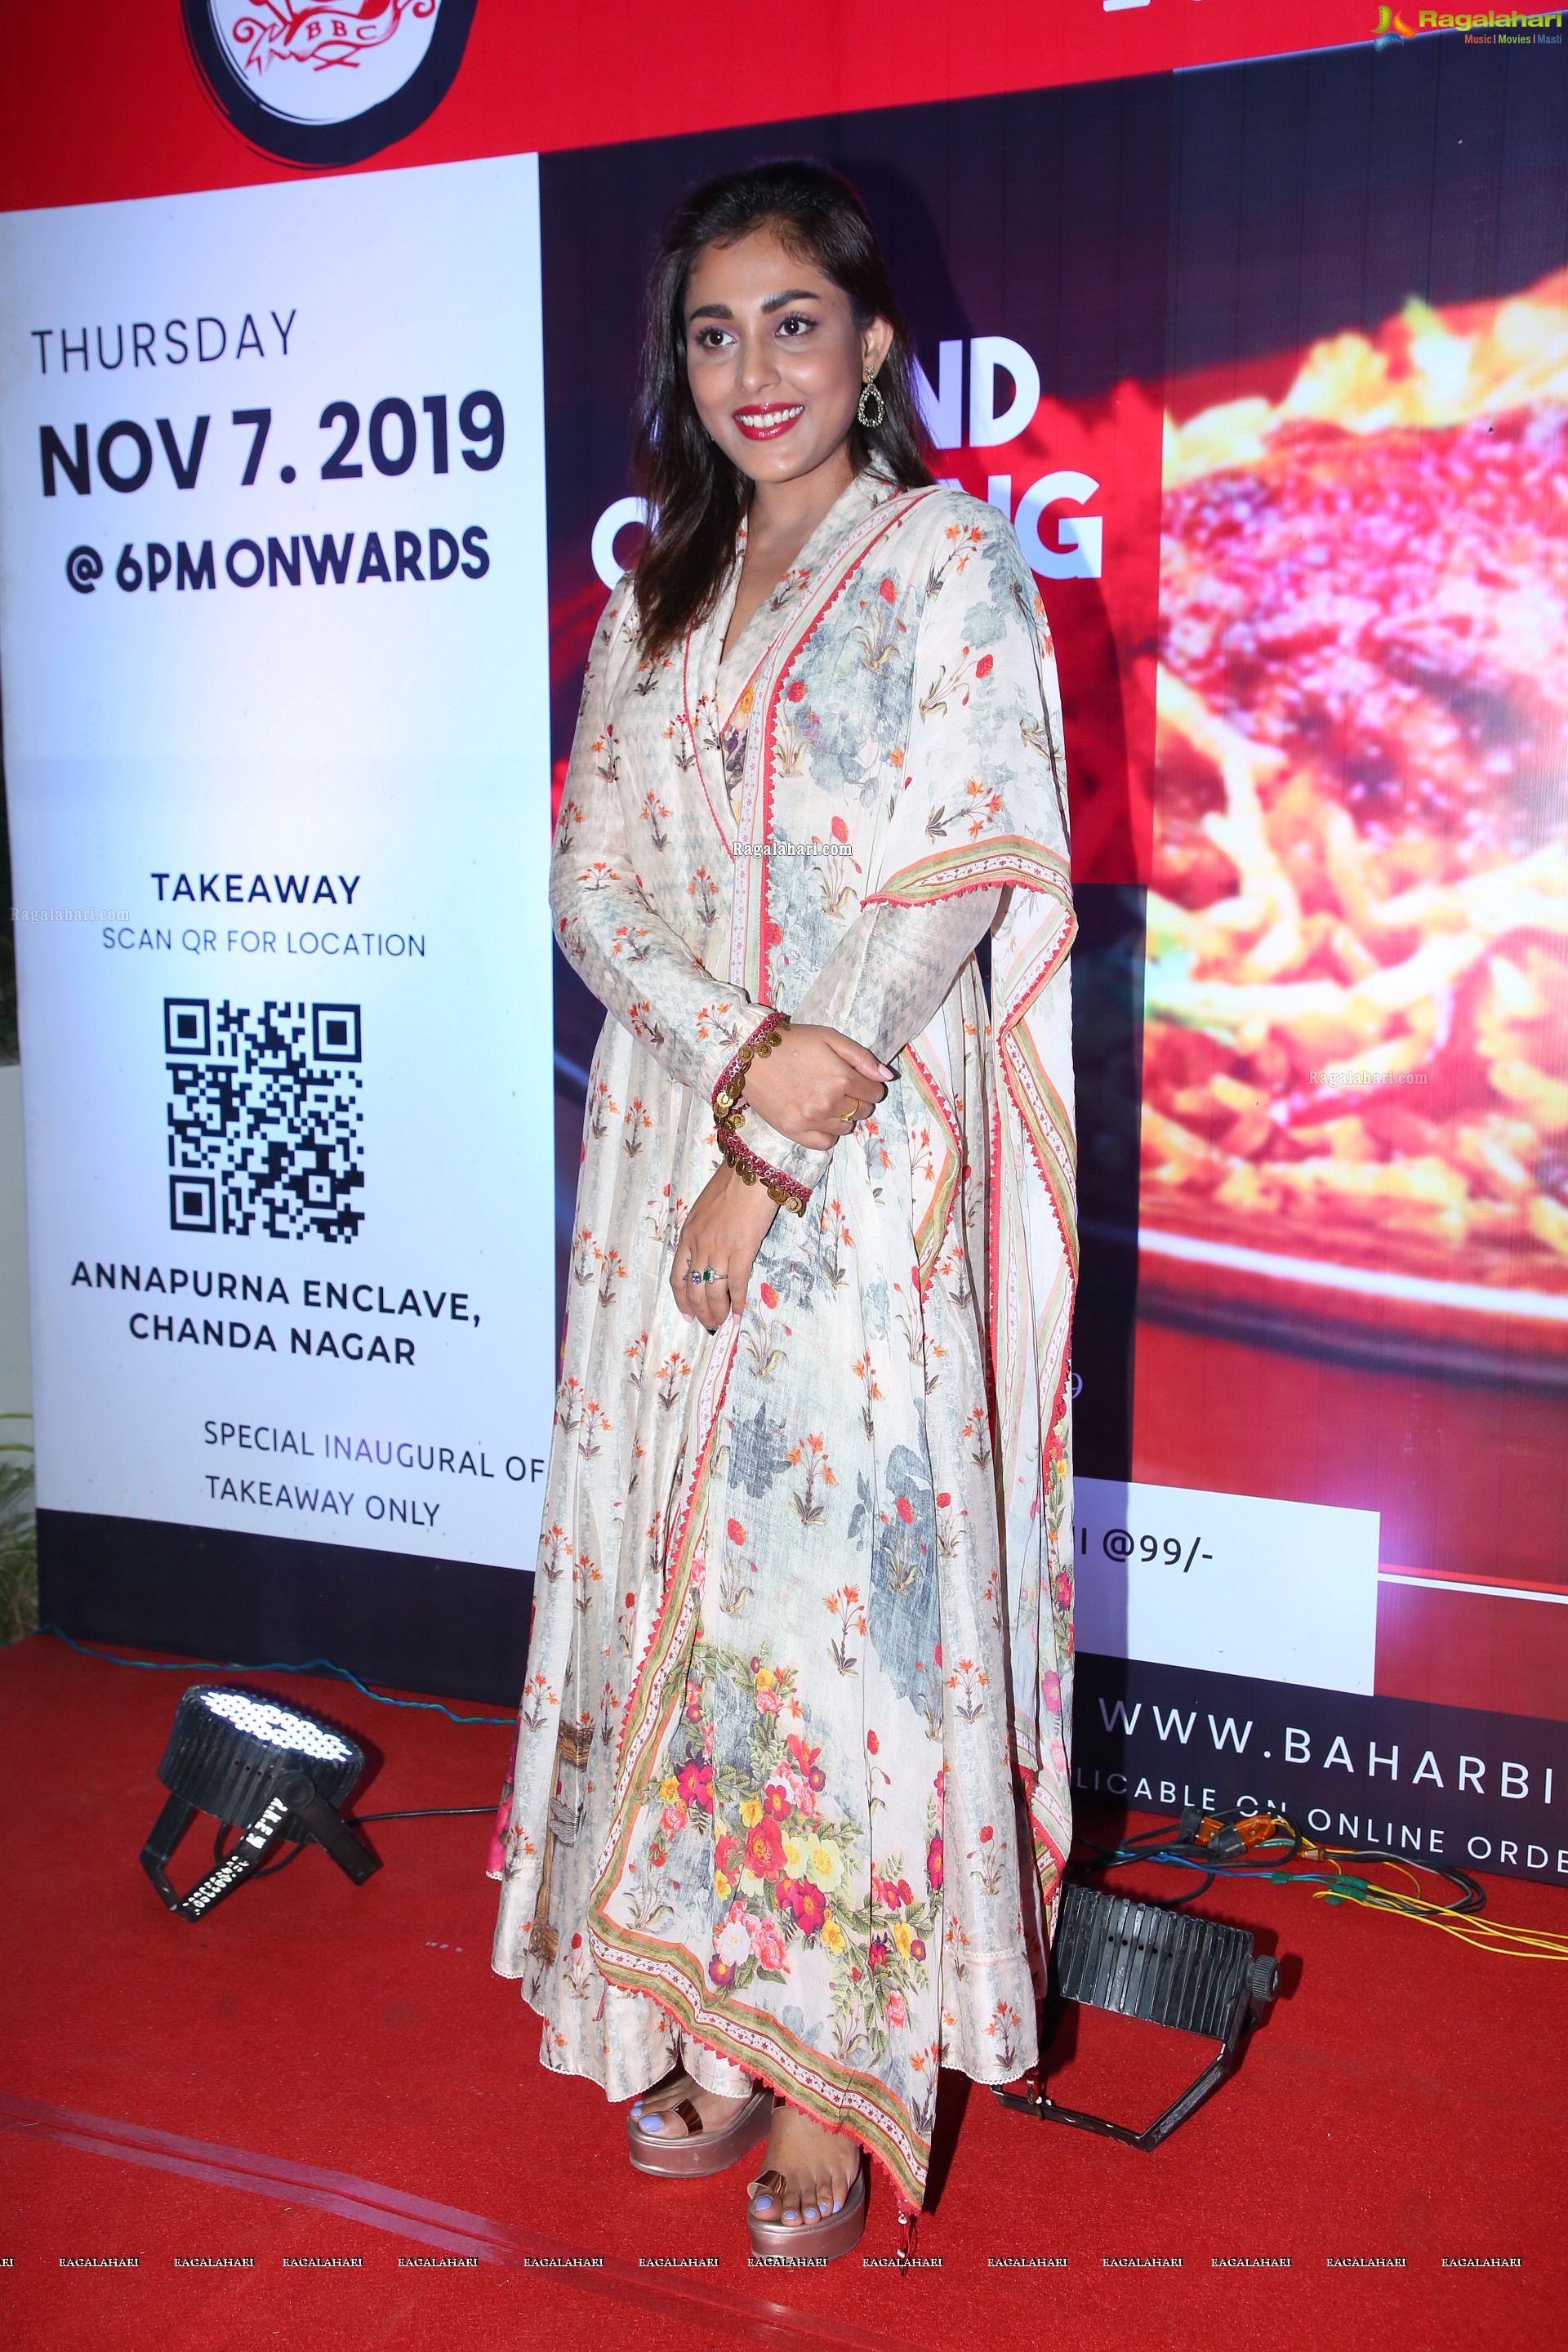 Madhu Shalini at Bahar Biryani Cafe Takeaway Outlet Launch